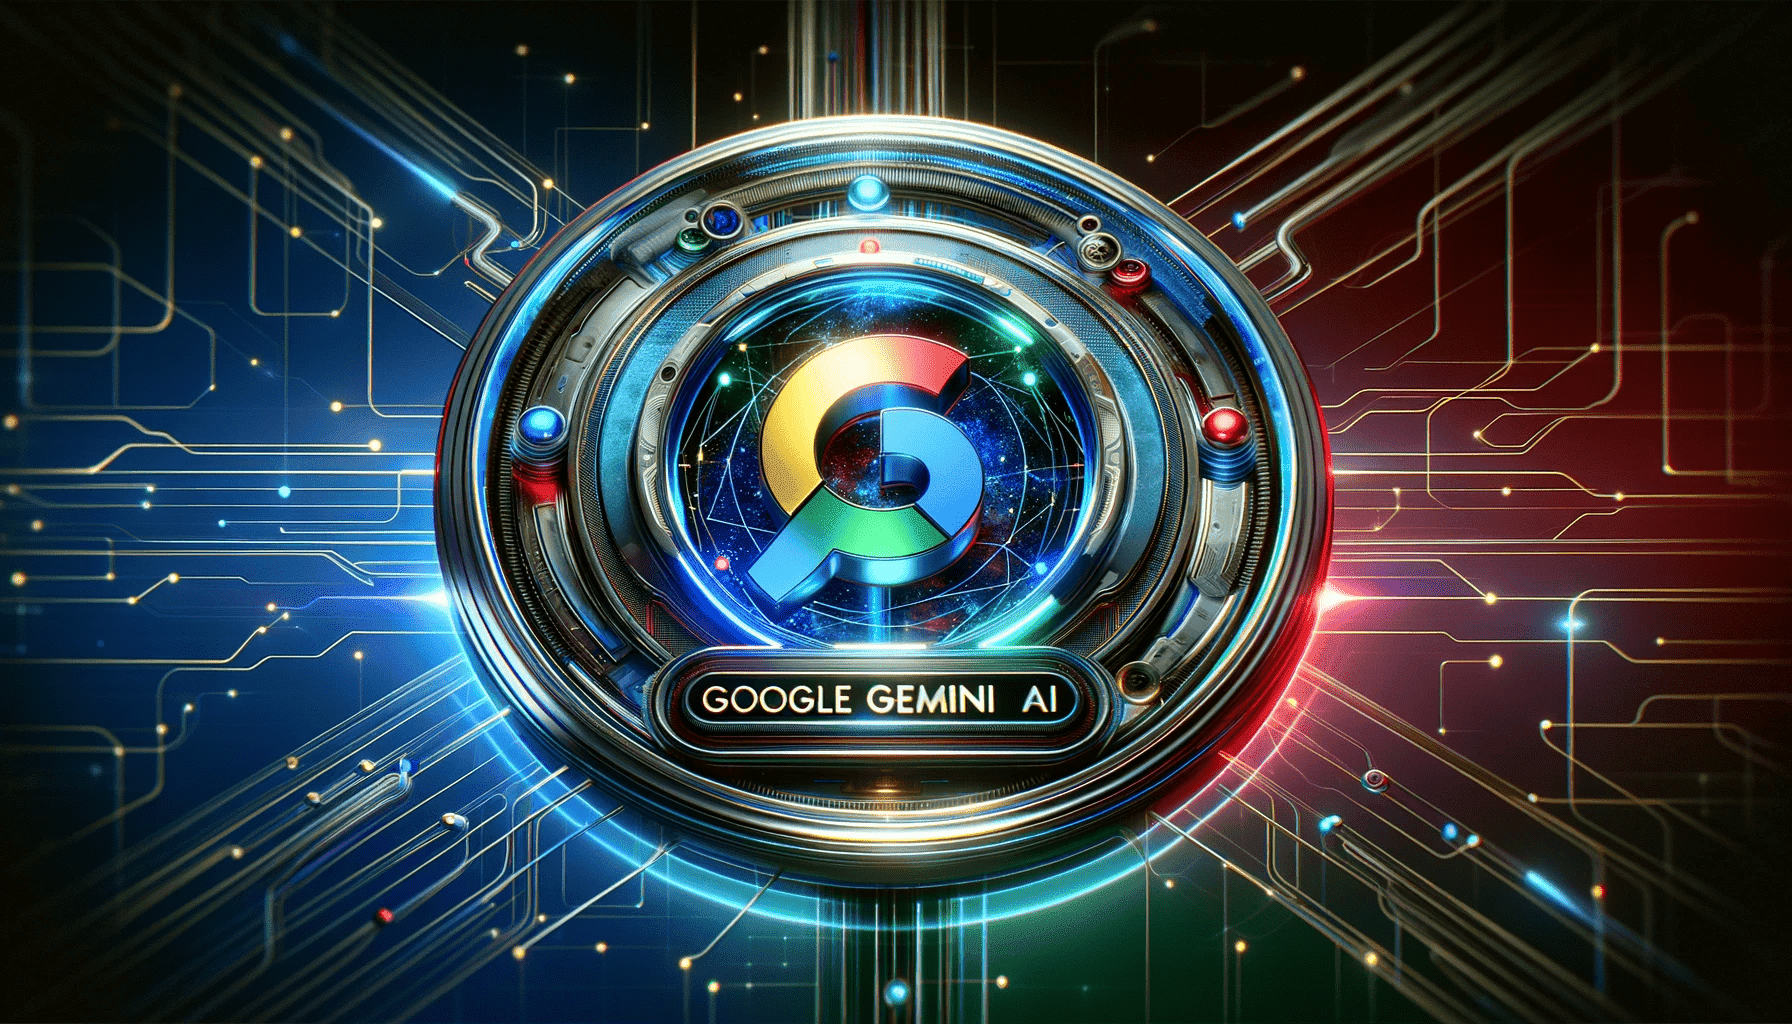 Google launched a powerful new AI model Gemini